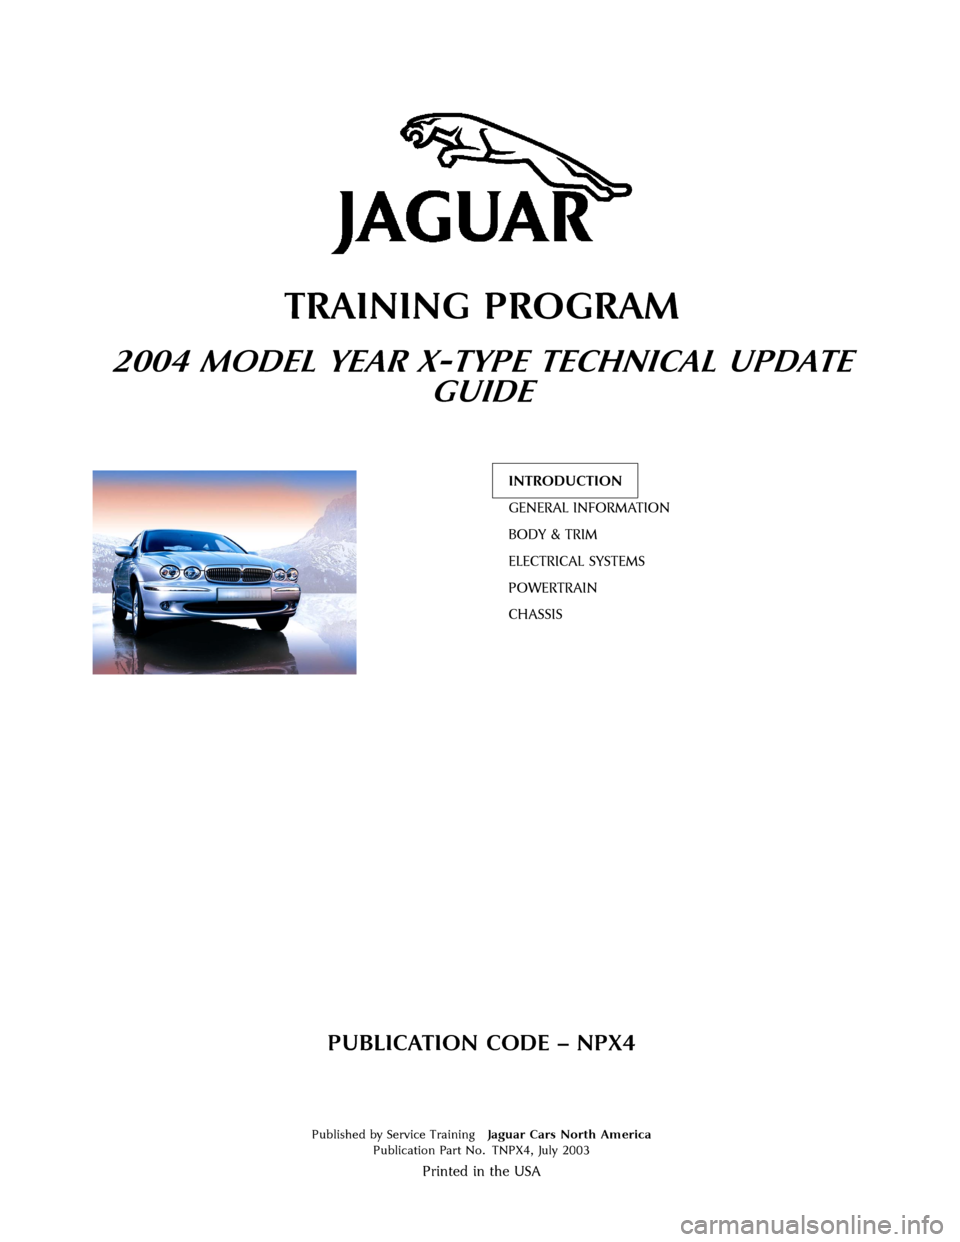 JAGUAR X TYPE 2004 1.G Technical Guide Update  	
  	
 
	 
 




 	
	
	
  

 

	


 
  
3XEOLVKHG E\ 6HUYLFH 7UDLQLQJ-